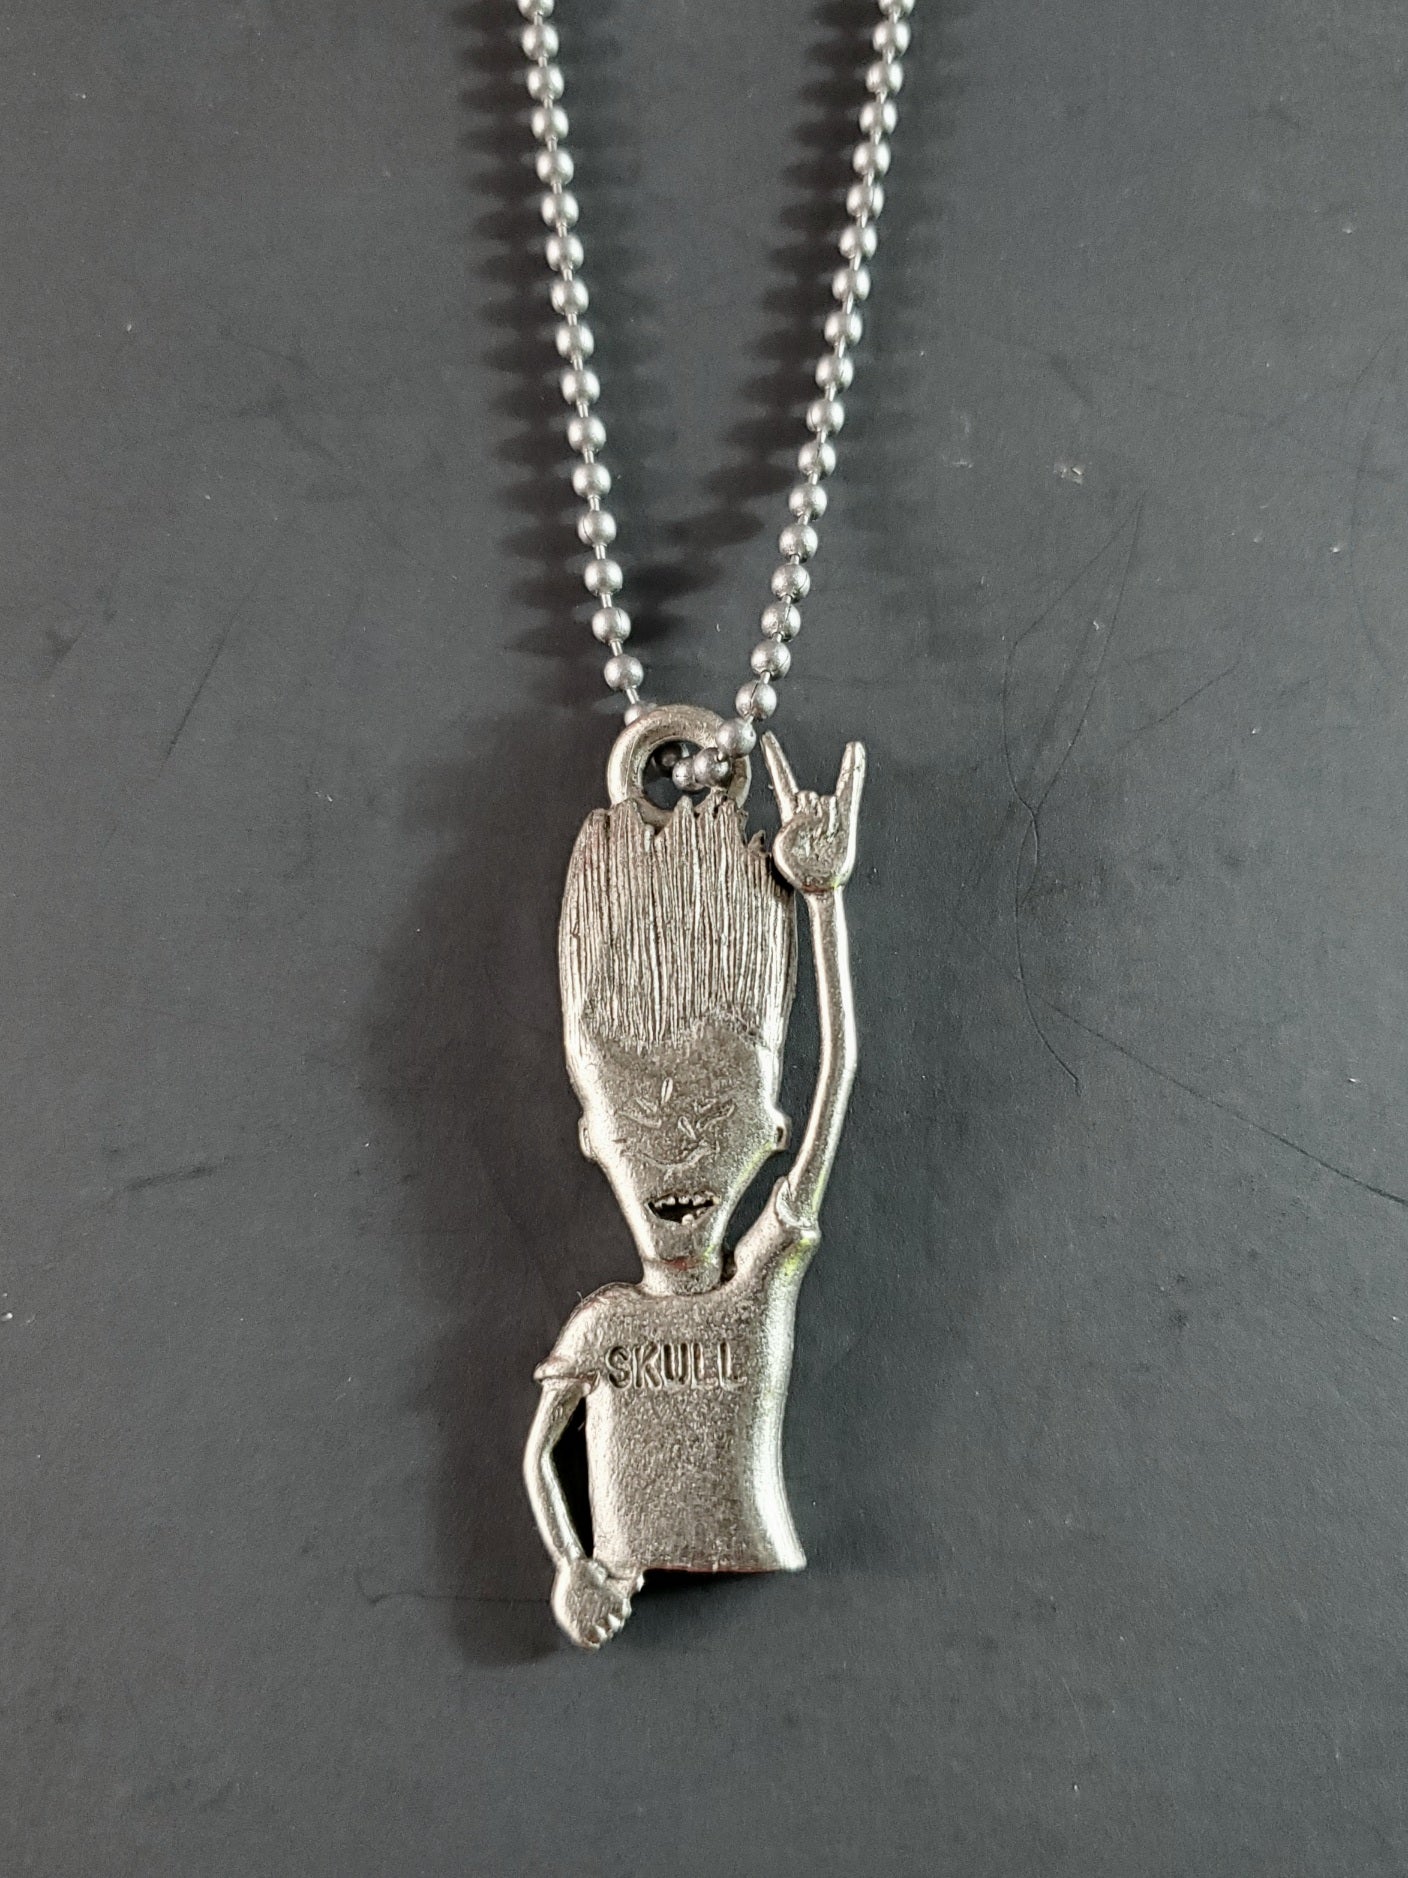 Beavis and Butt-Head deadstock necklace featuring pewter pendant of Butt-Head headbanging strung on 29" ballchain.